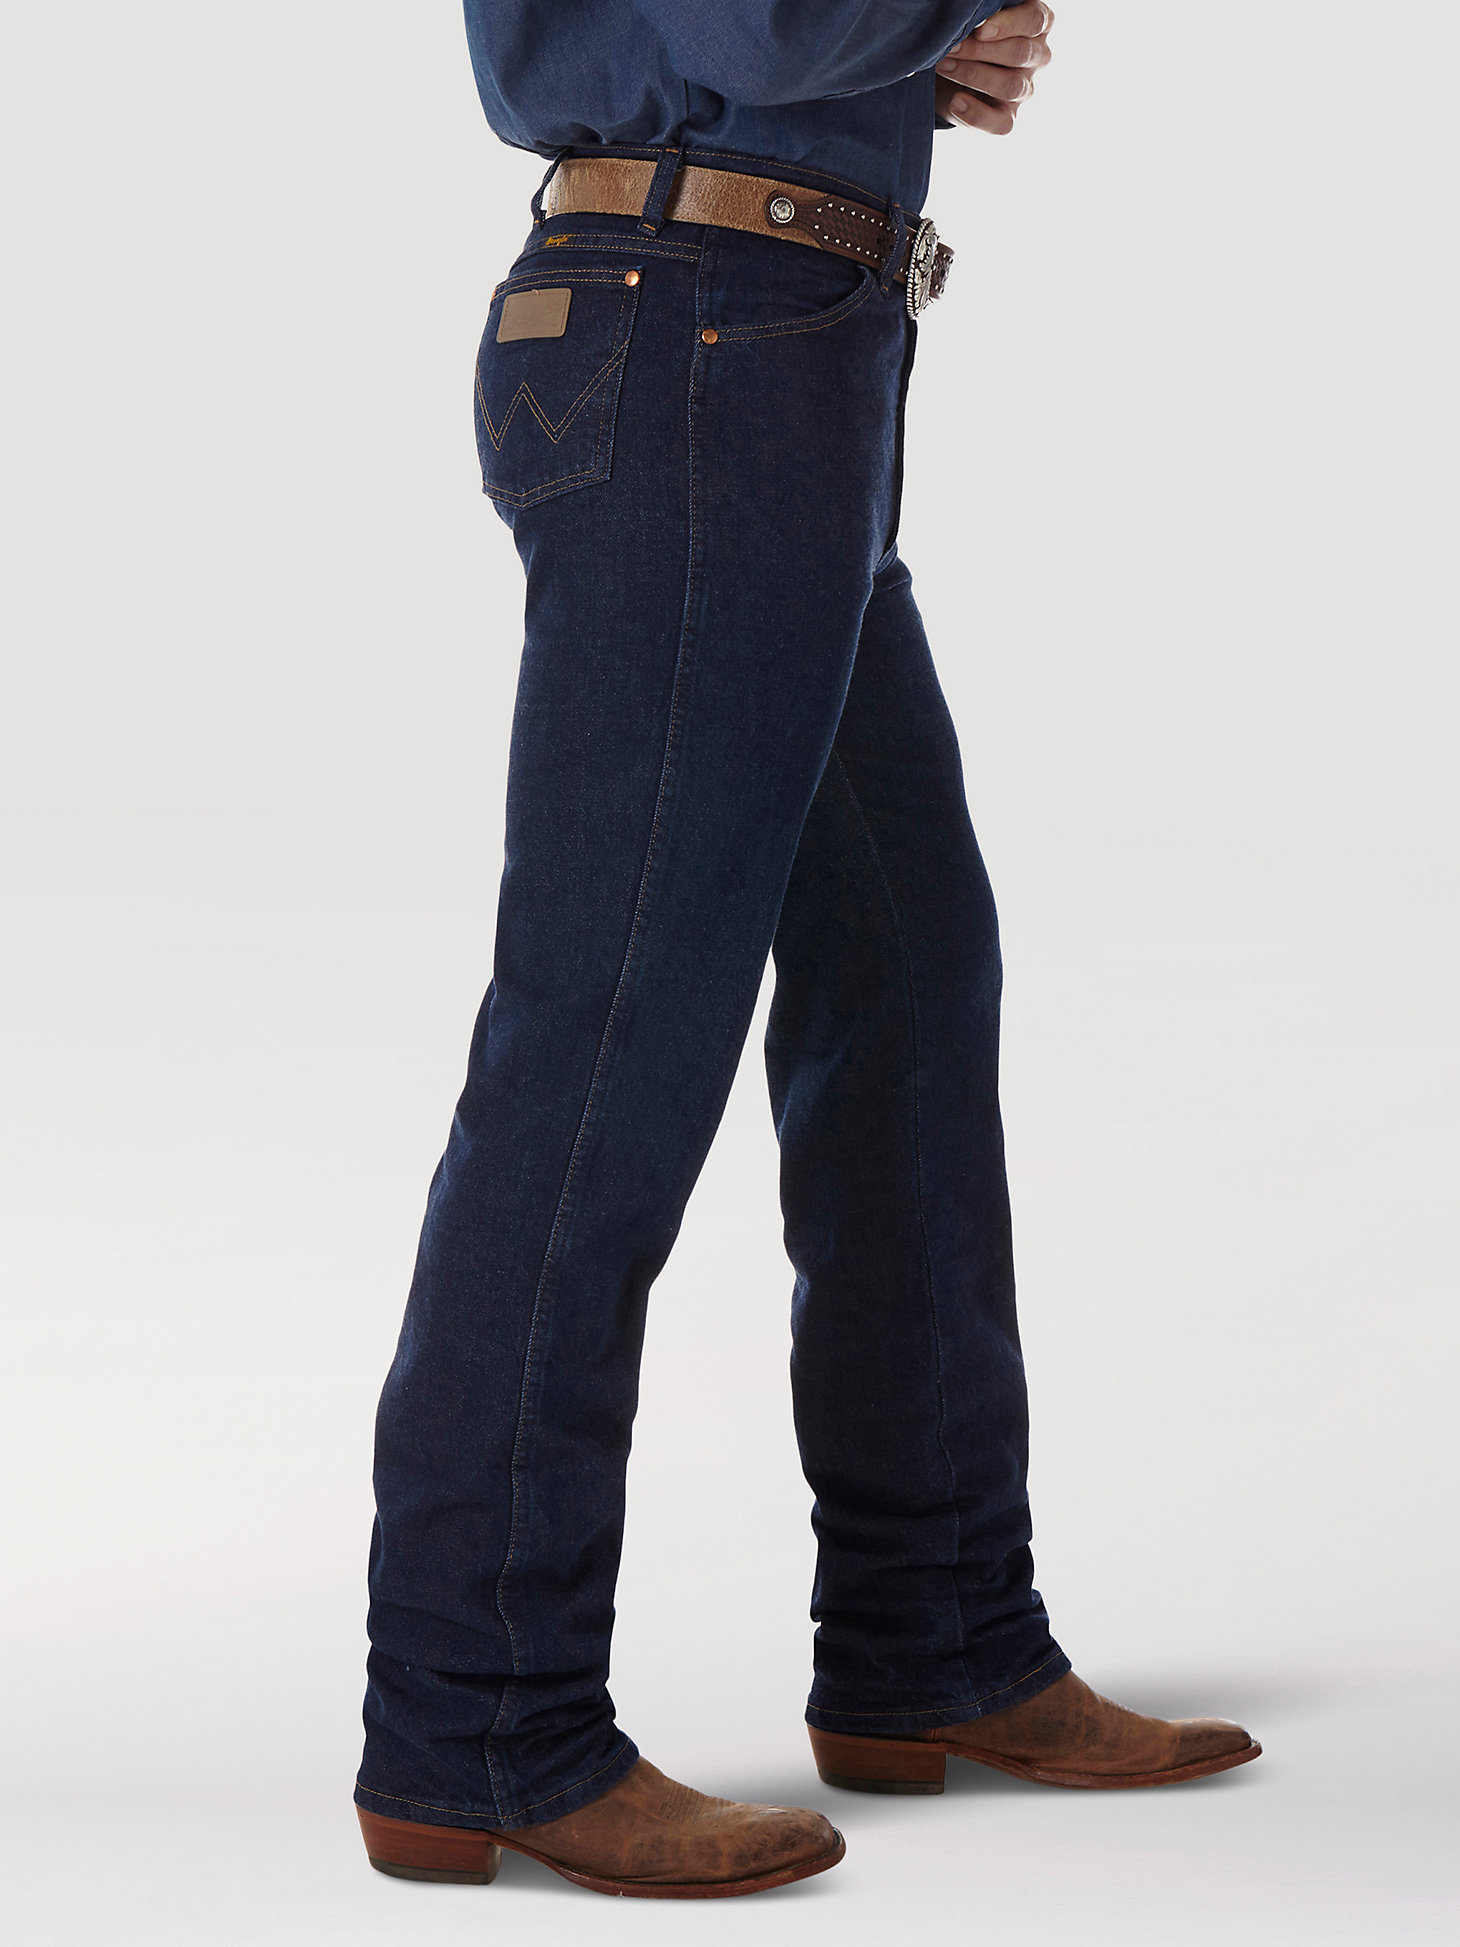 Wrangler® Cowboy Cut® Navy Stretch Slim Fit Jean in Navy alternative view 1